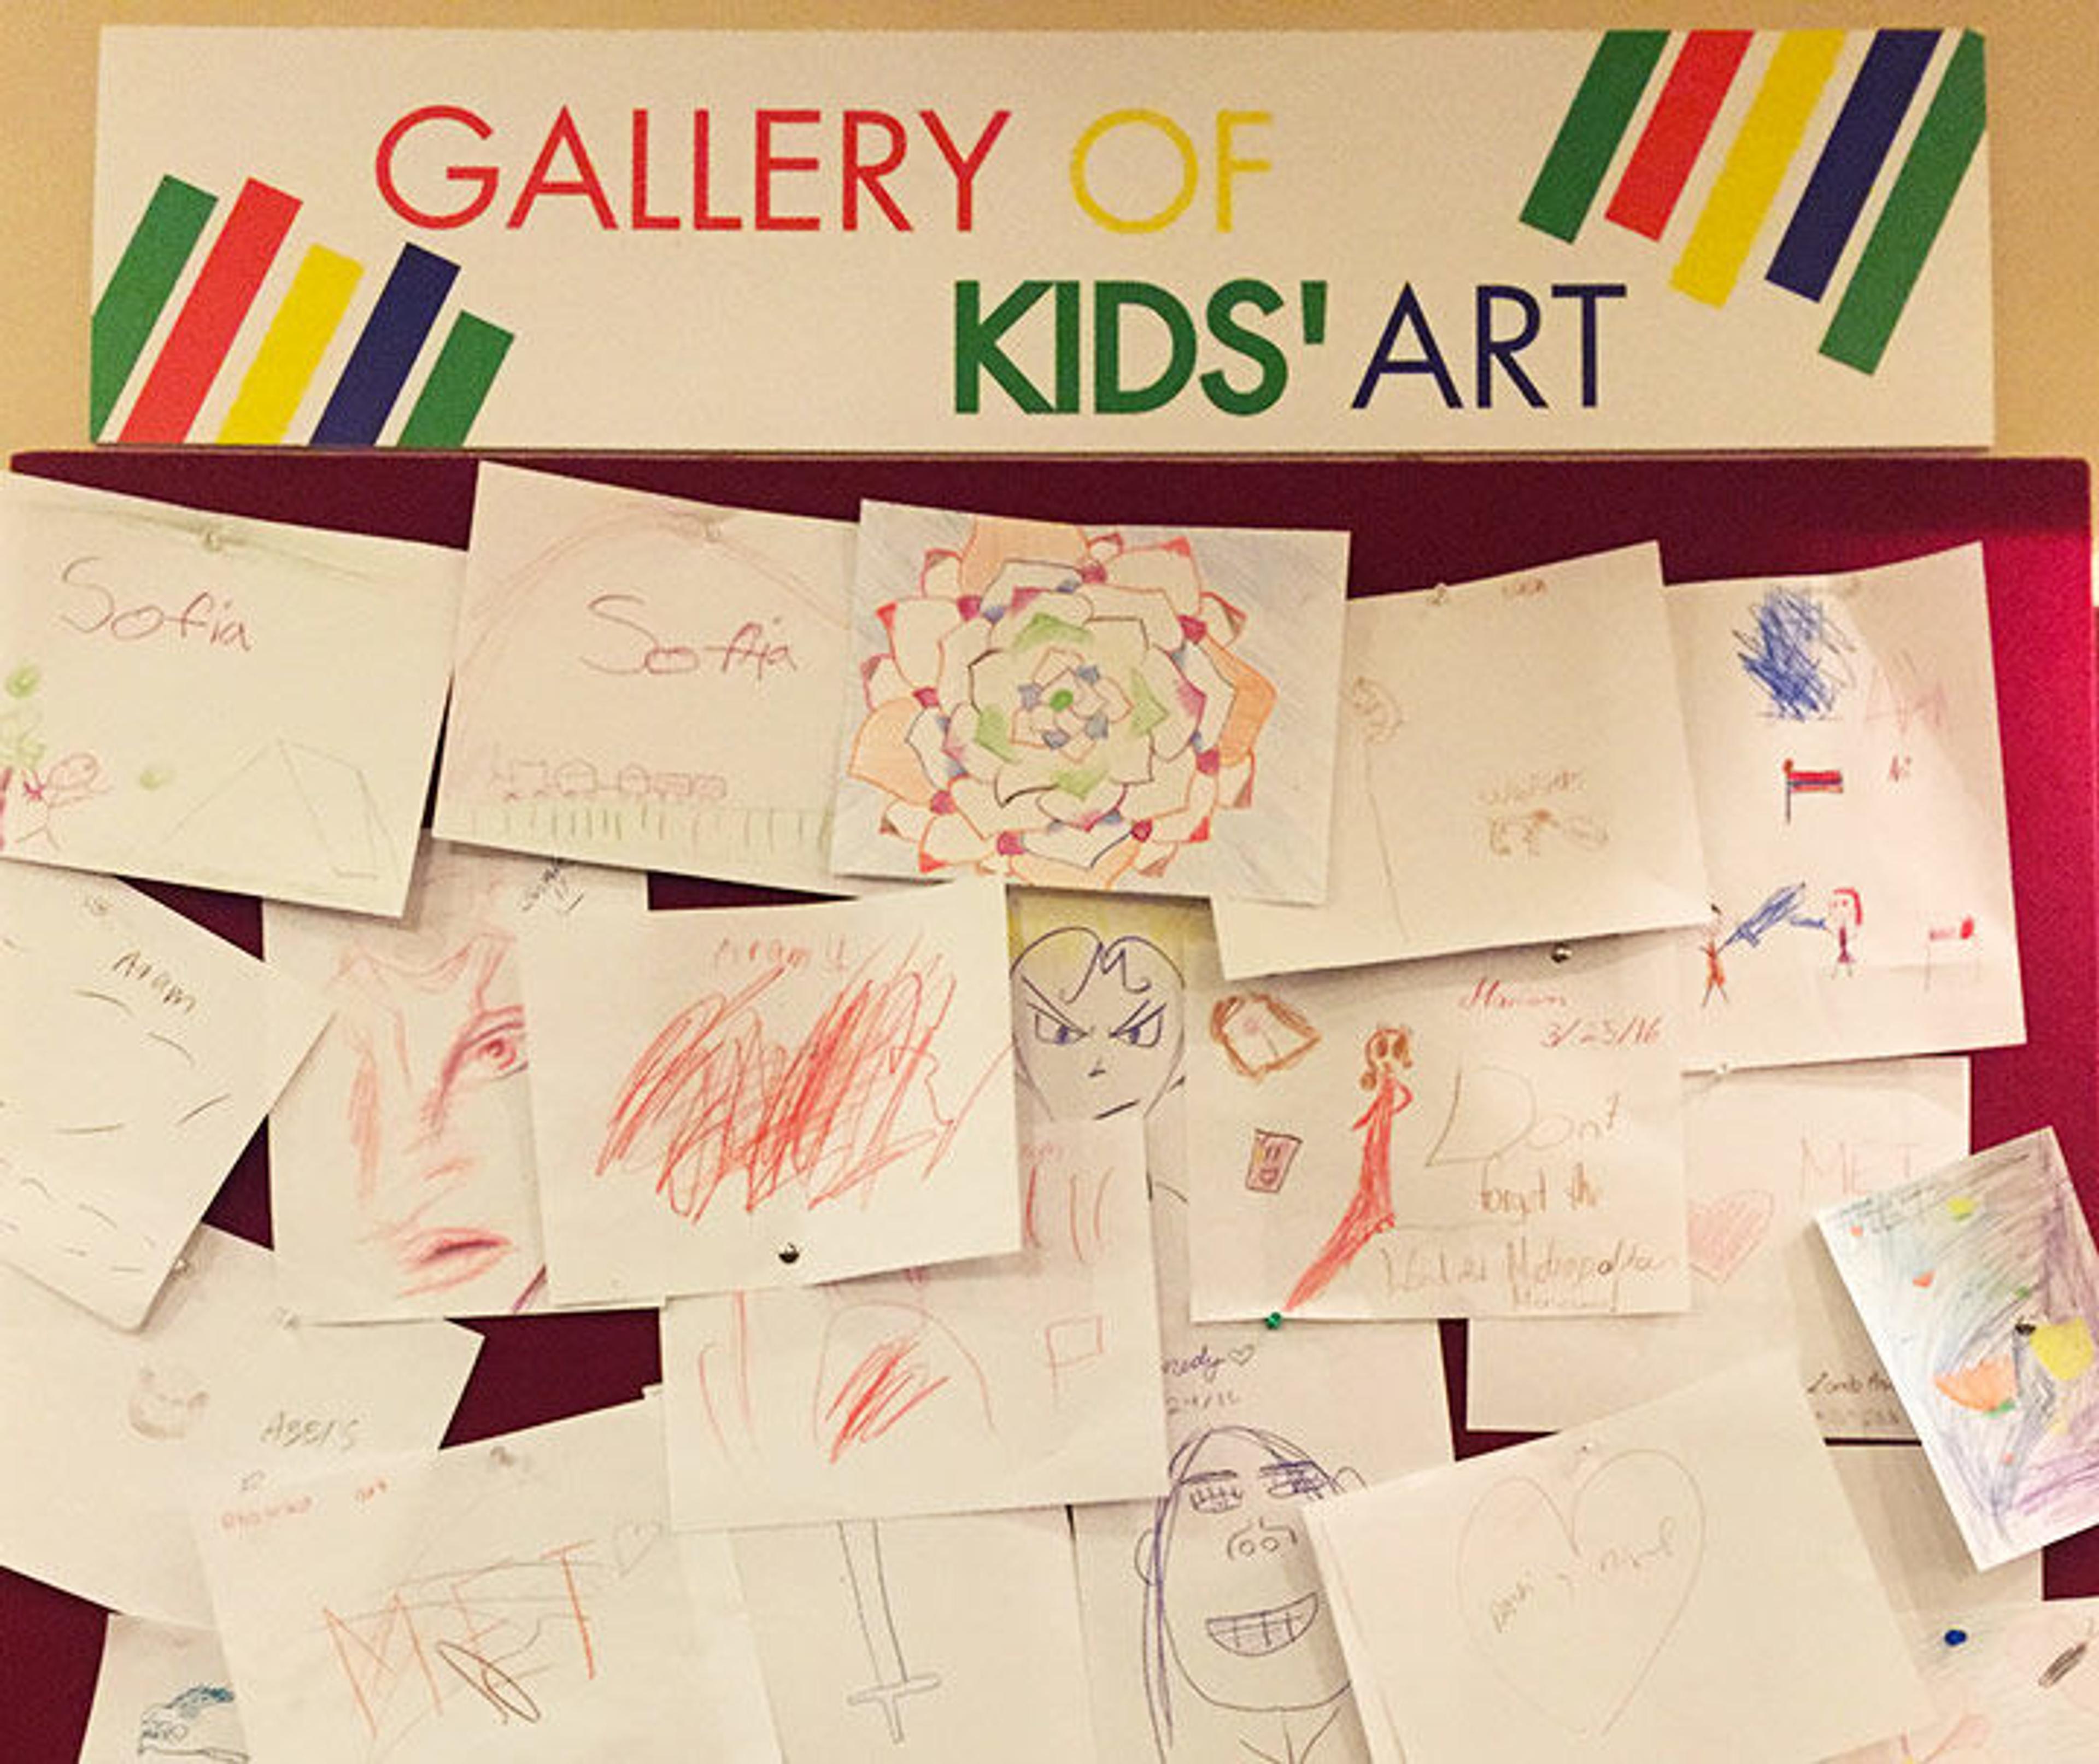 Gallery of Kids' Art